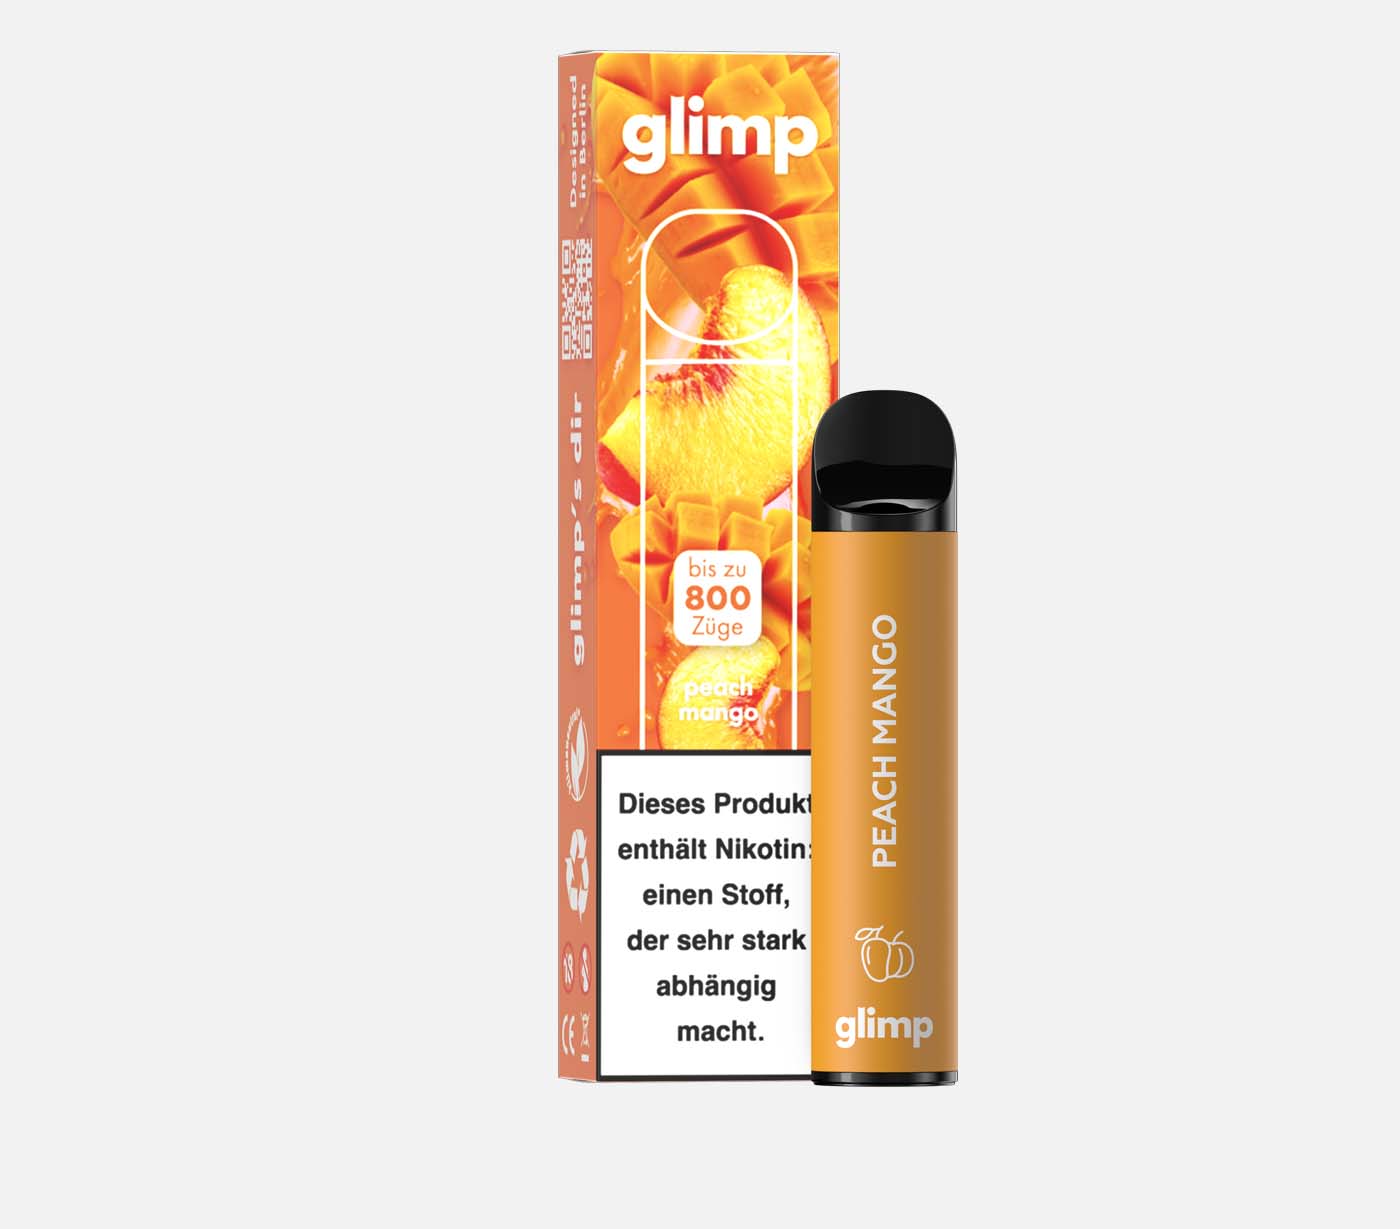 GLIMP 800 peach mango